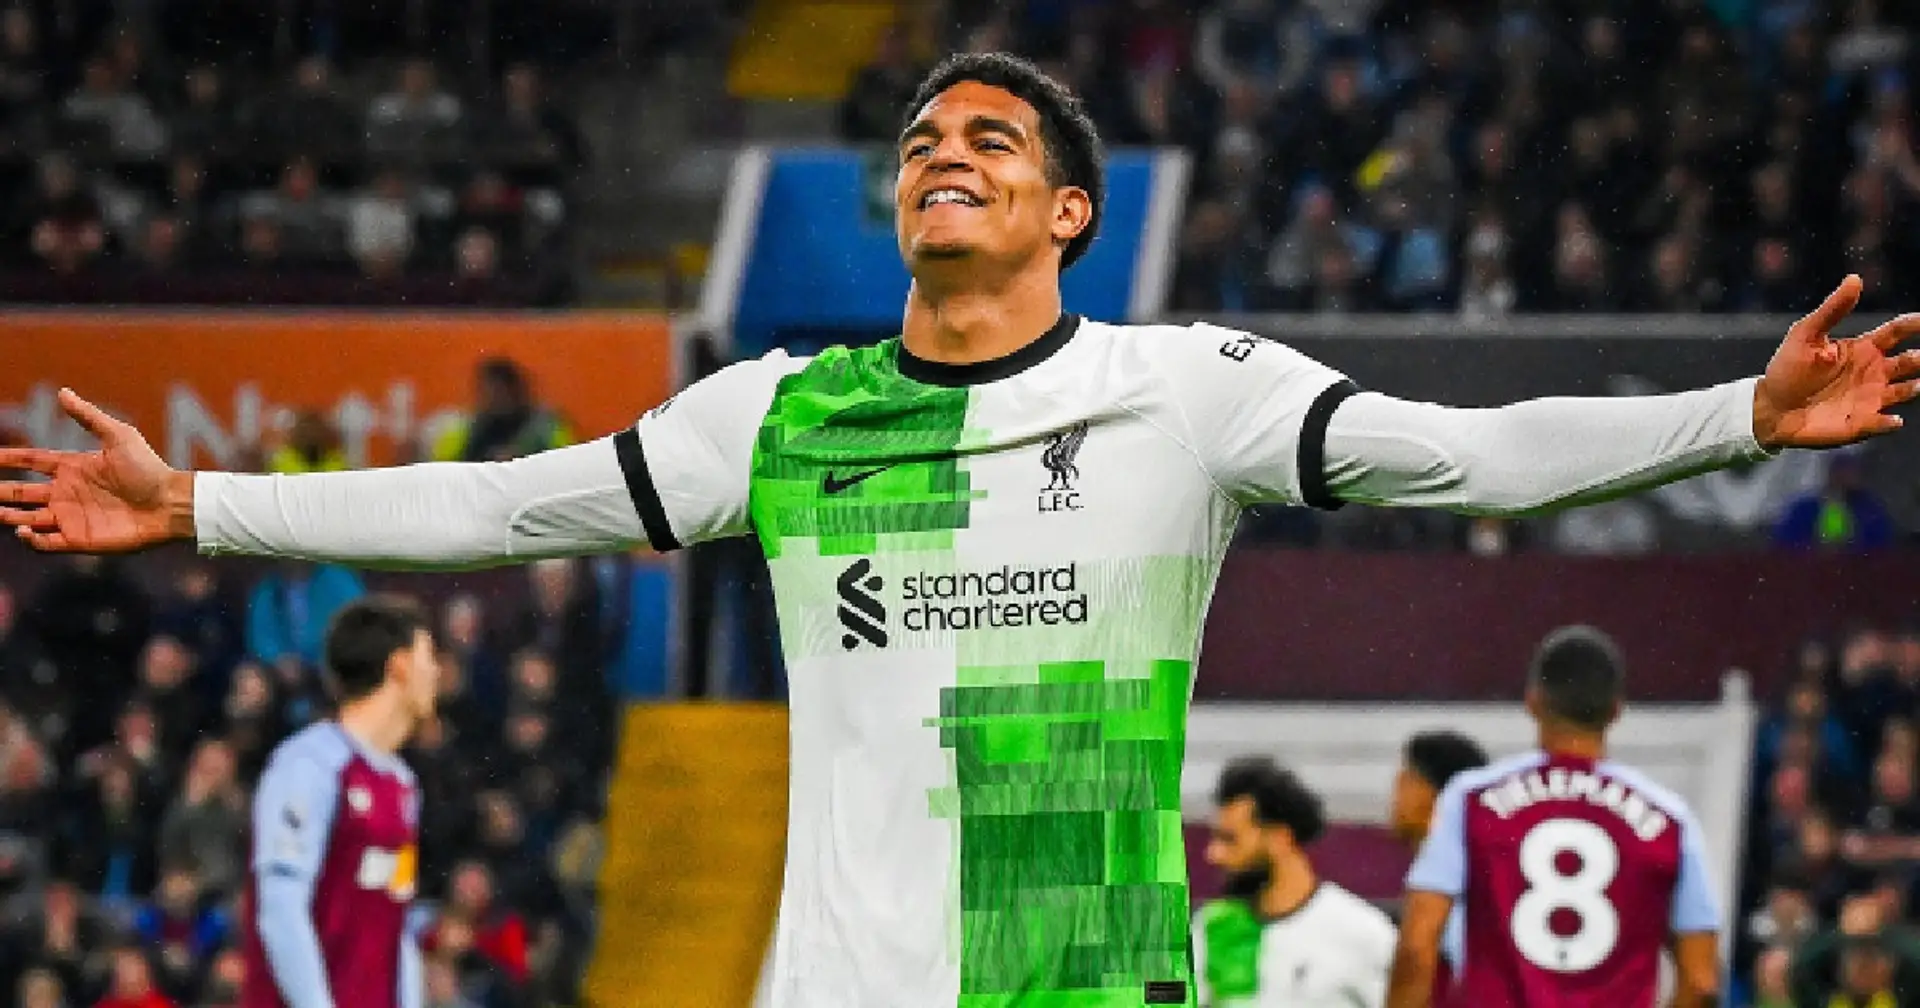 Quansah - 7, Salah - 6: Rating Liverpool players in Aston Villa draw